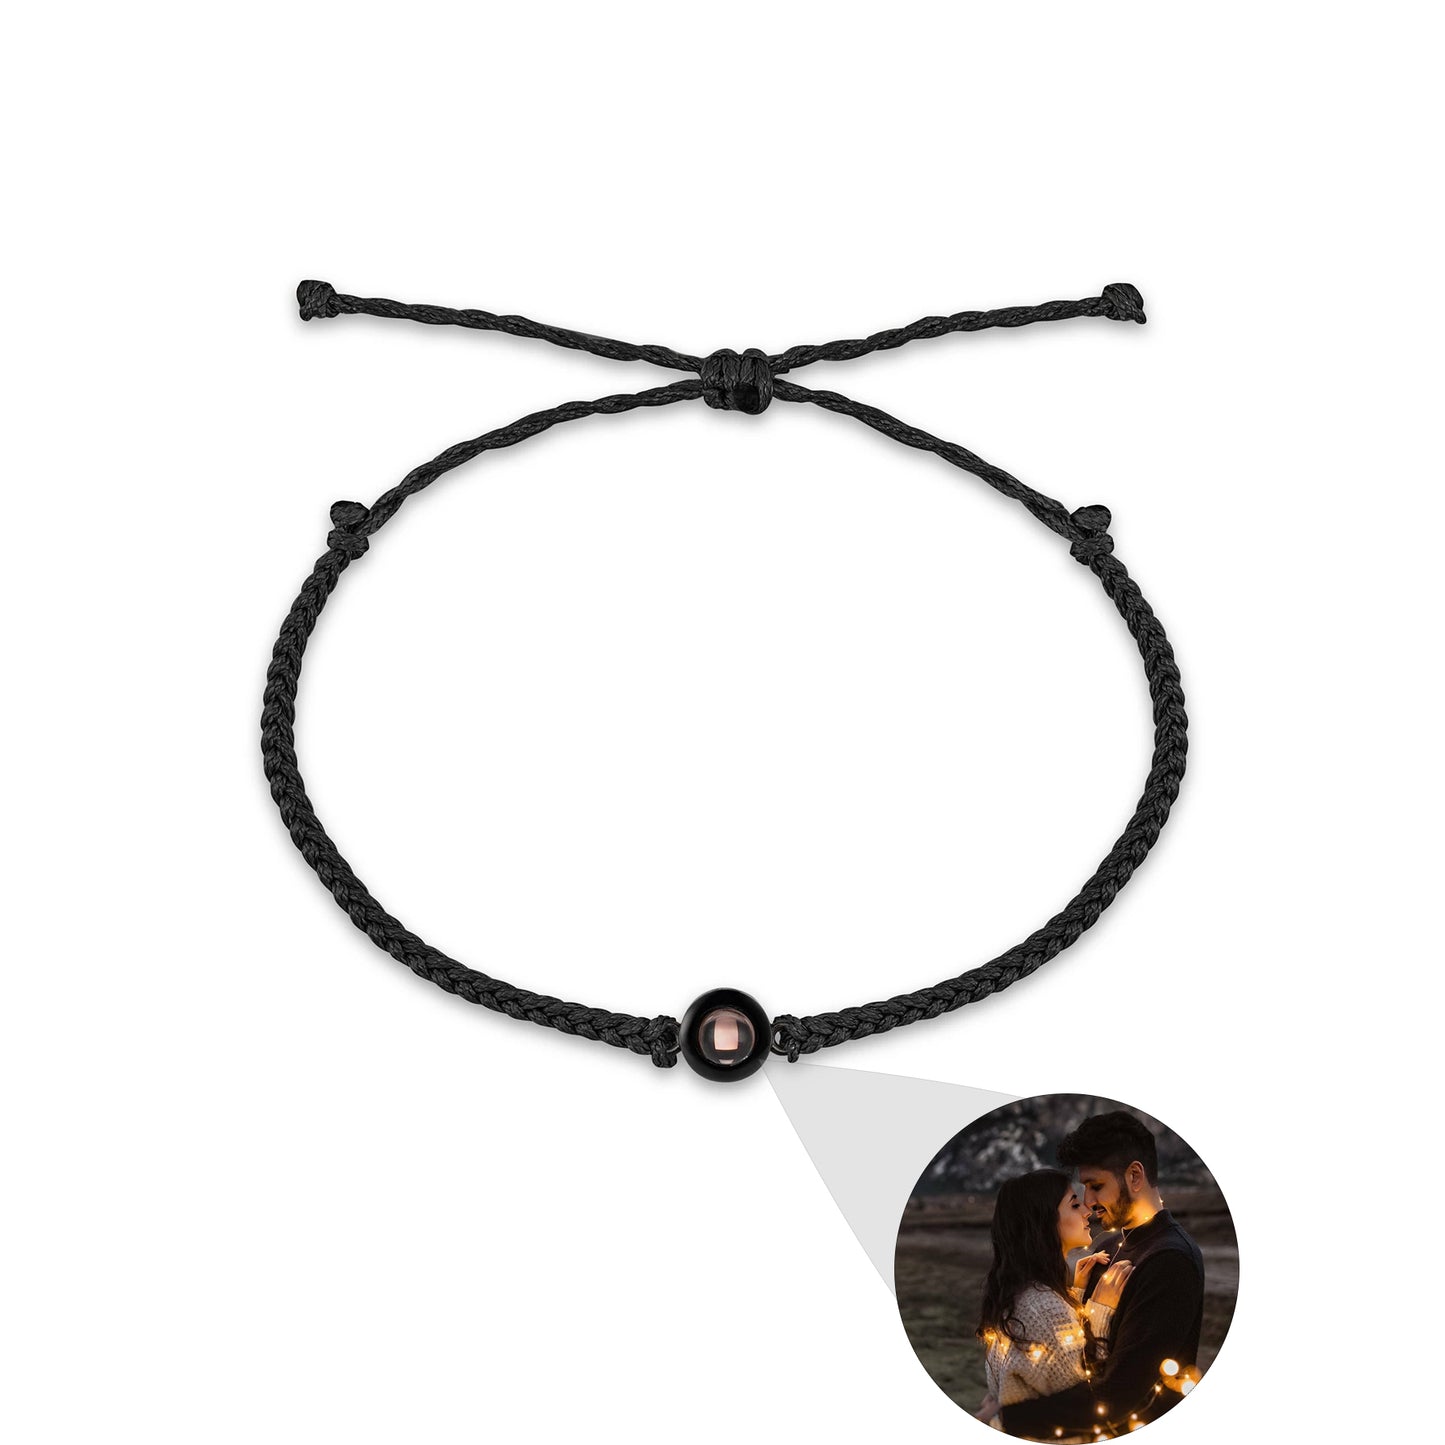 Hand Woven Bracelet with pendant